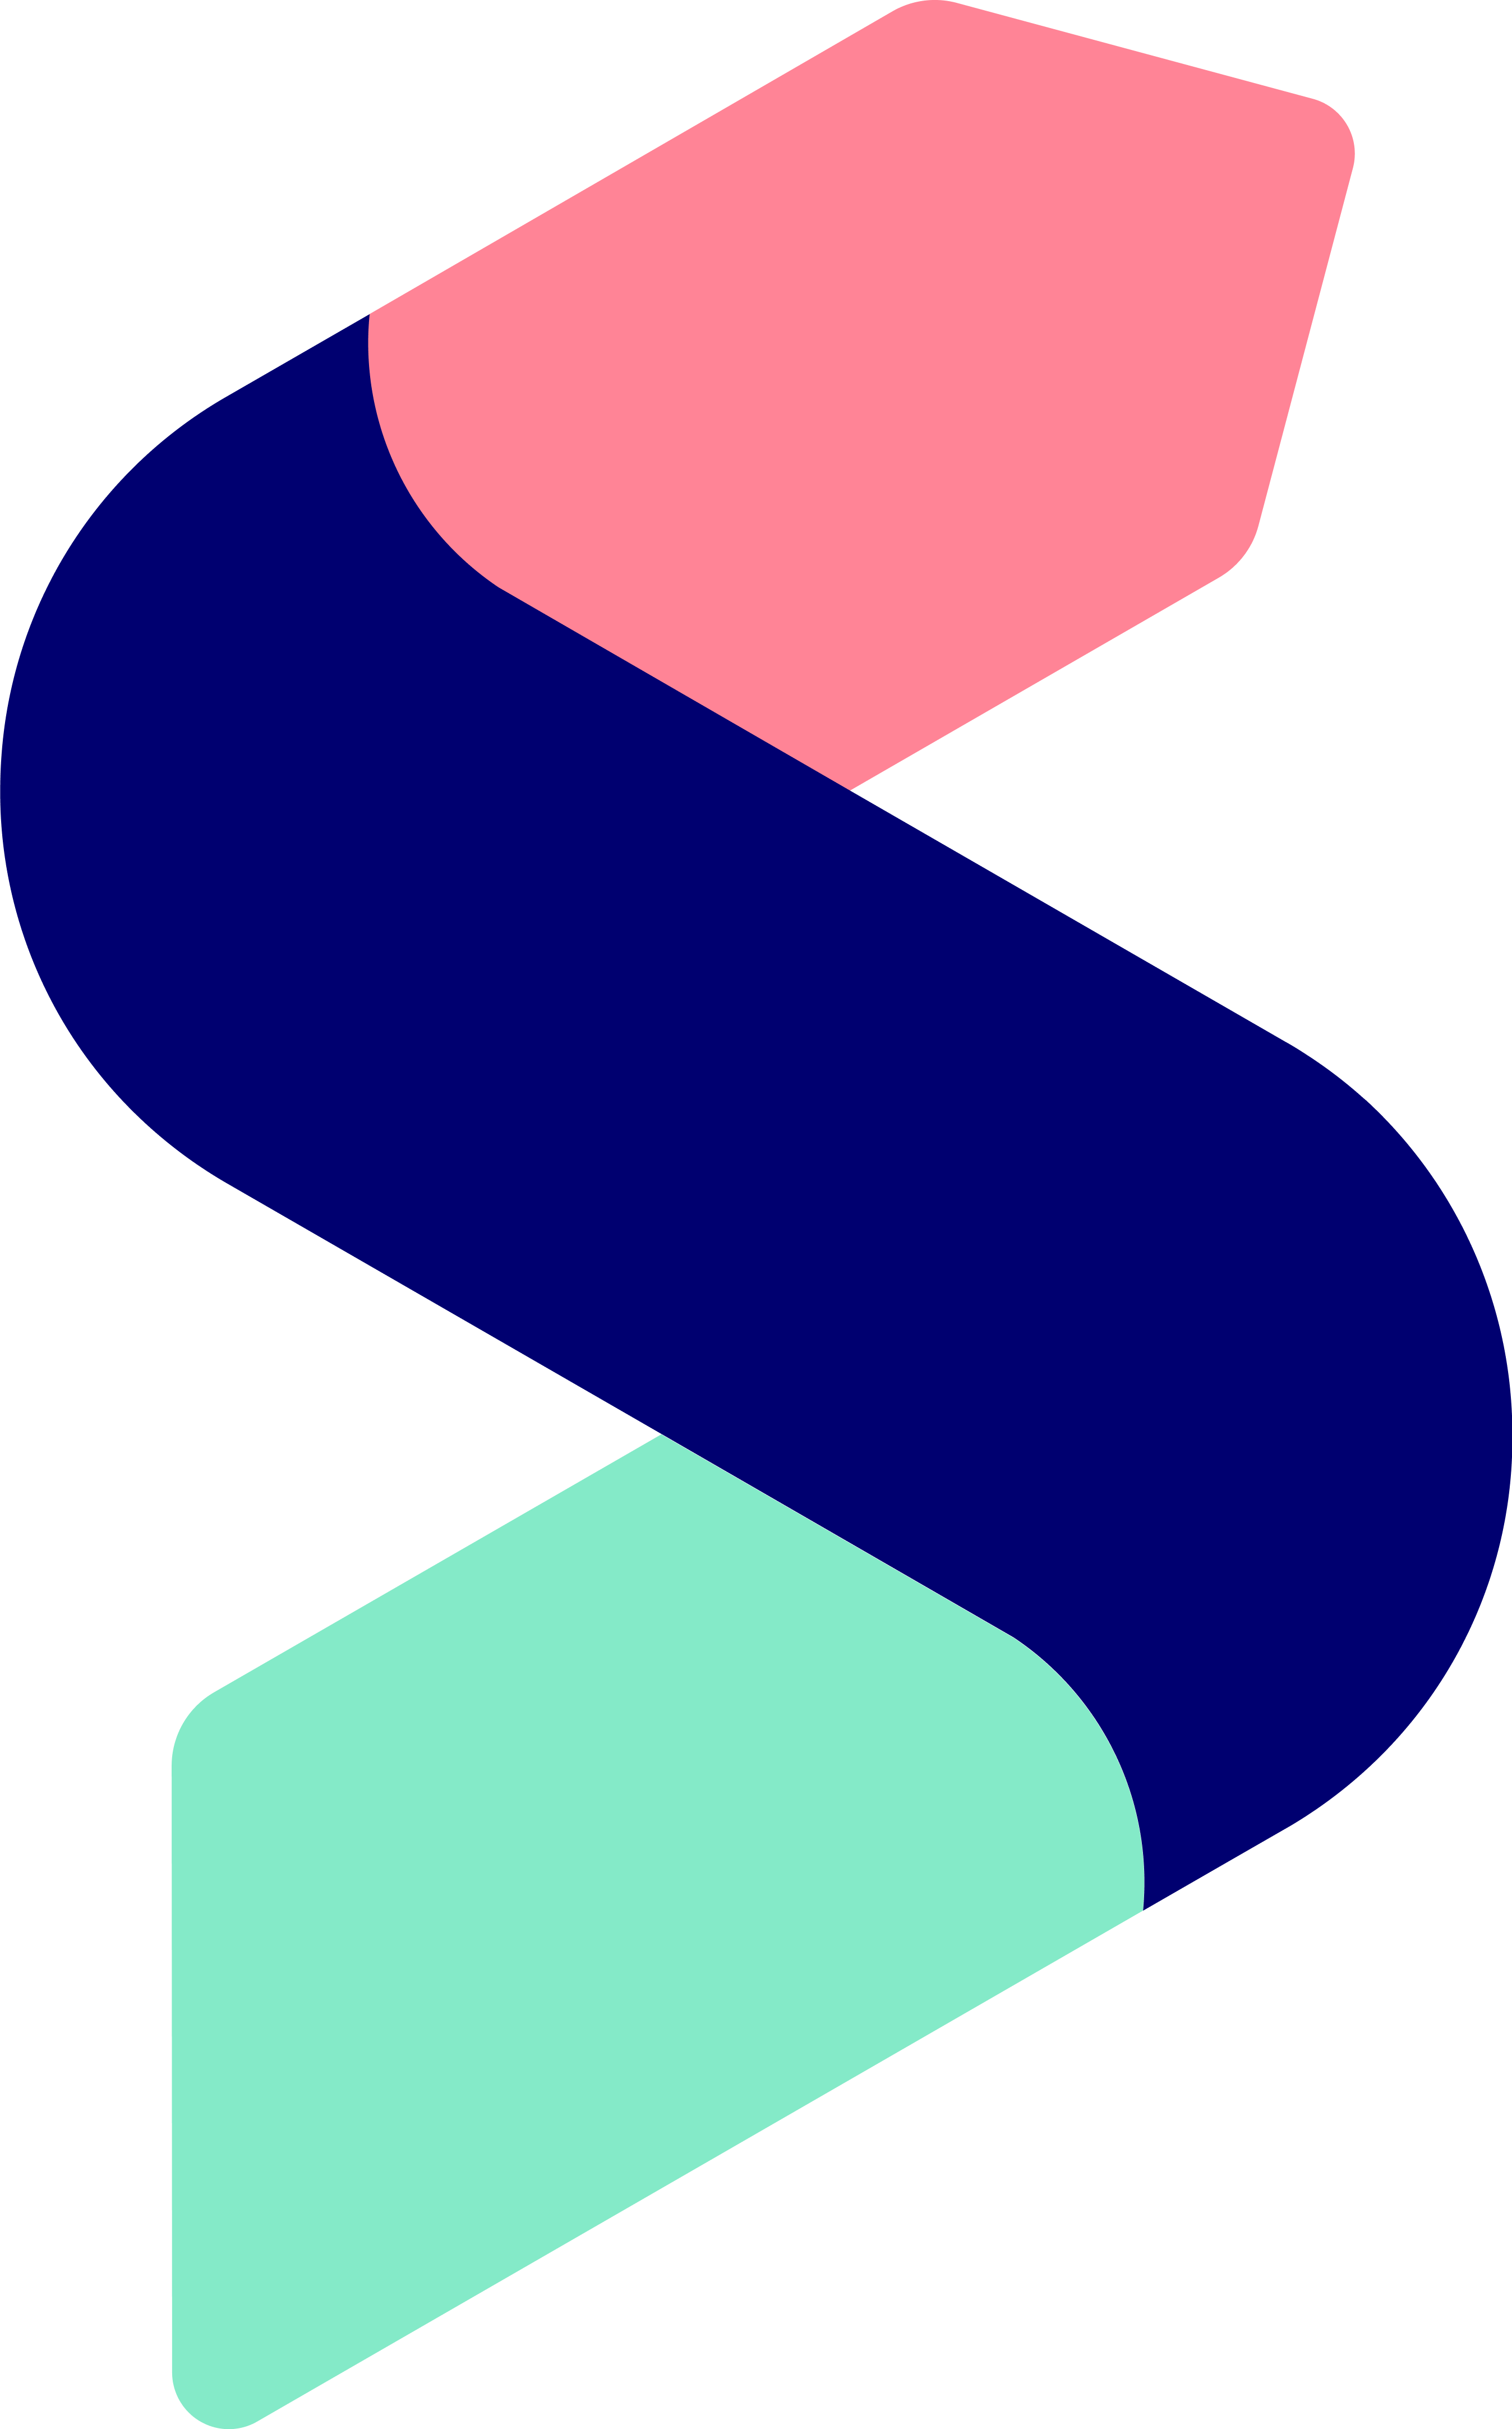 Samgöngustofa logo